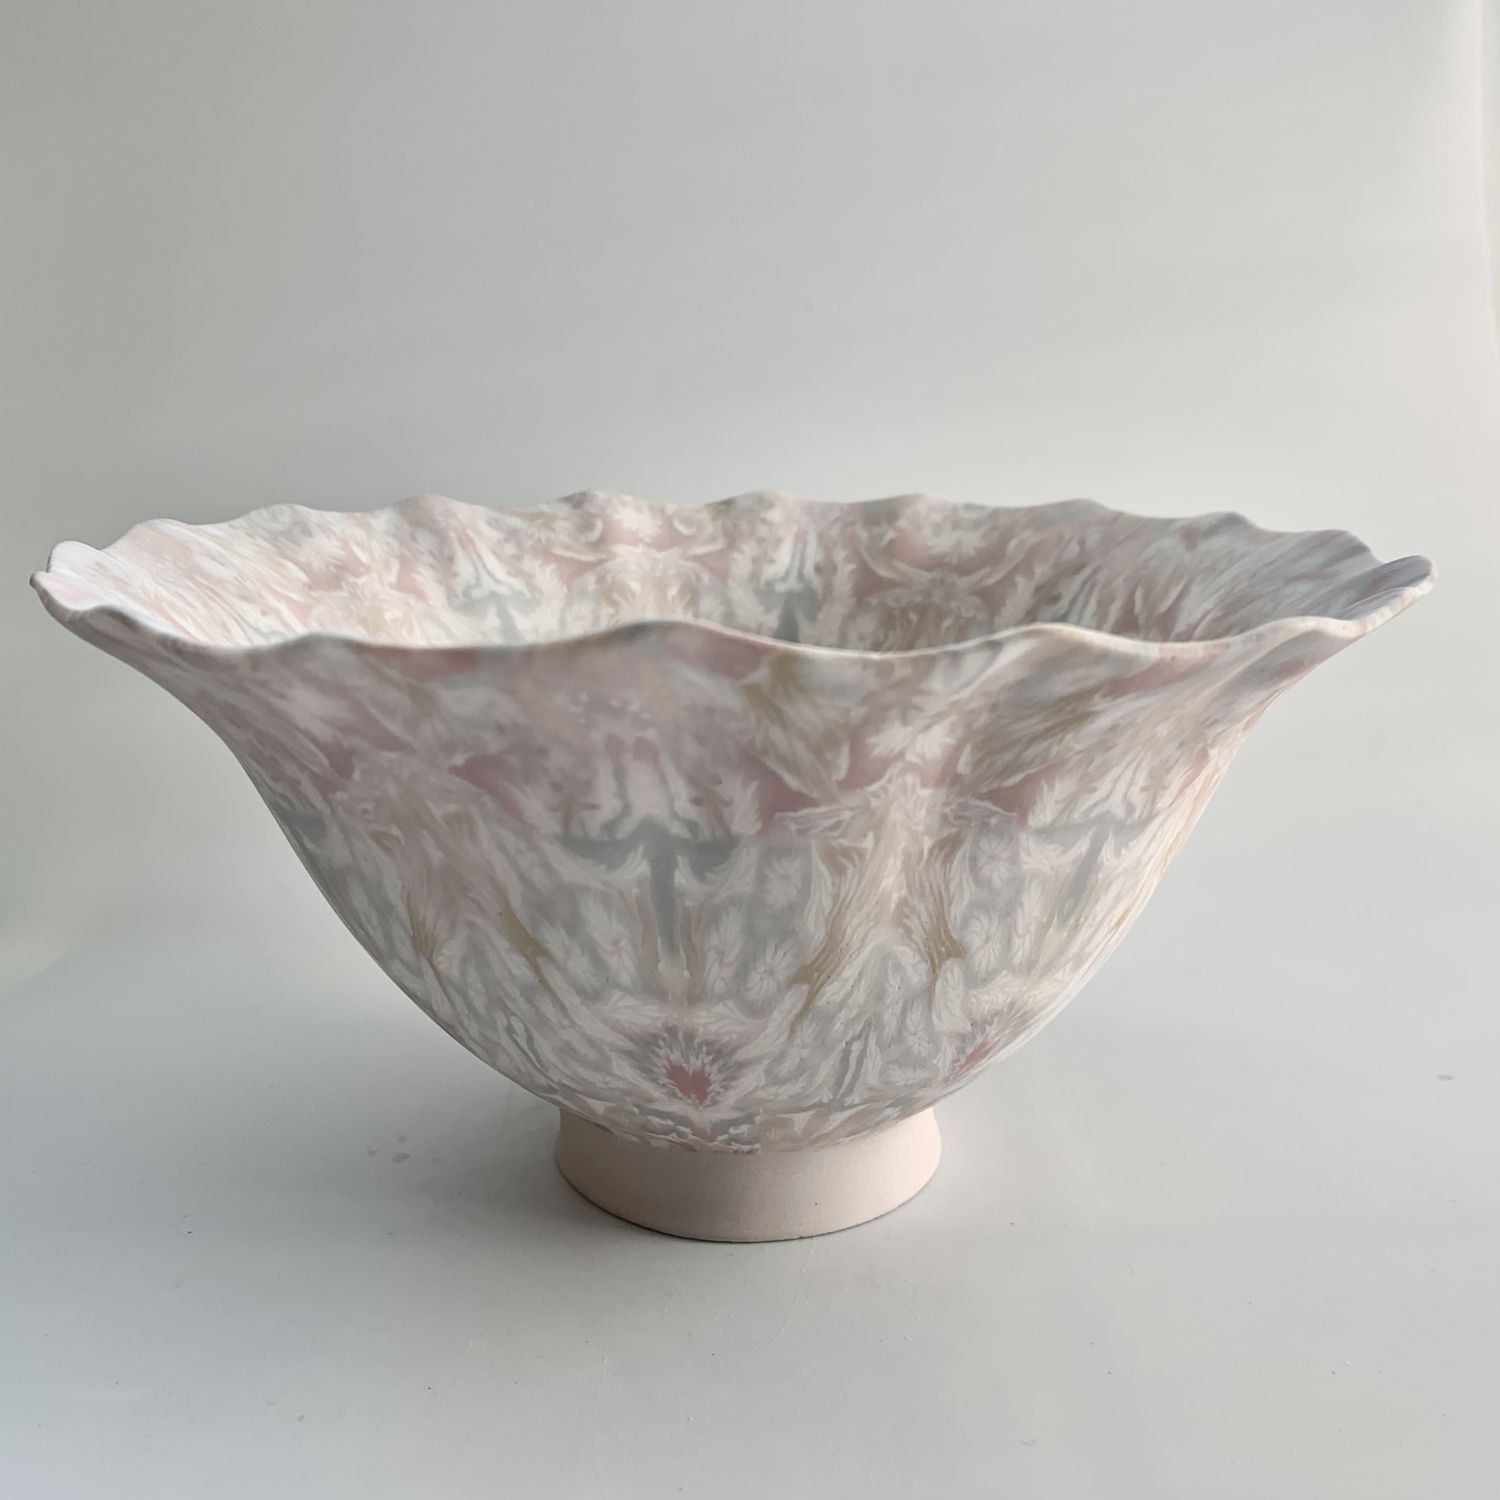 Eiko Maeda: Medium Pink and Yellow Bowl Product Image 2 of 4